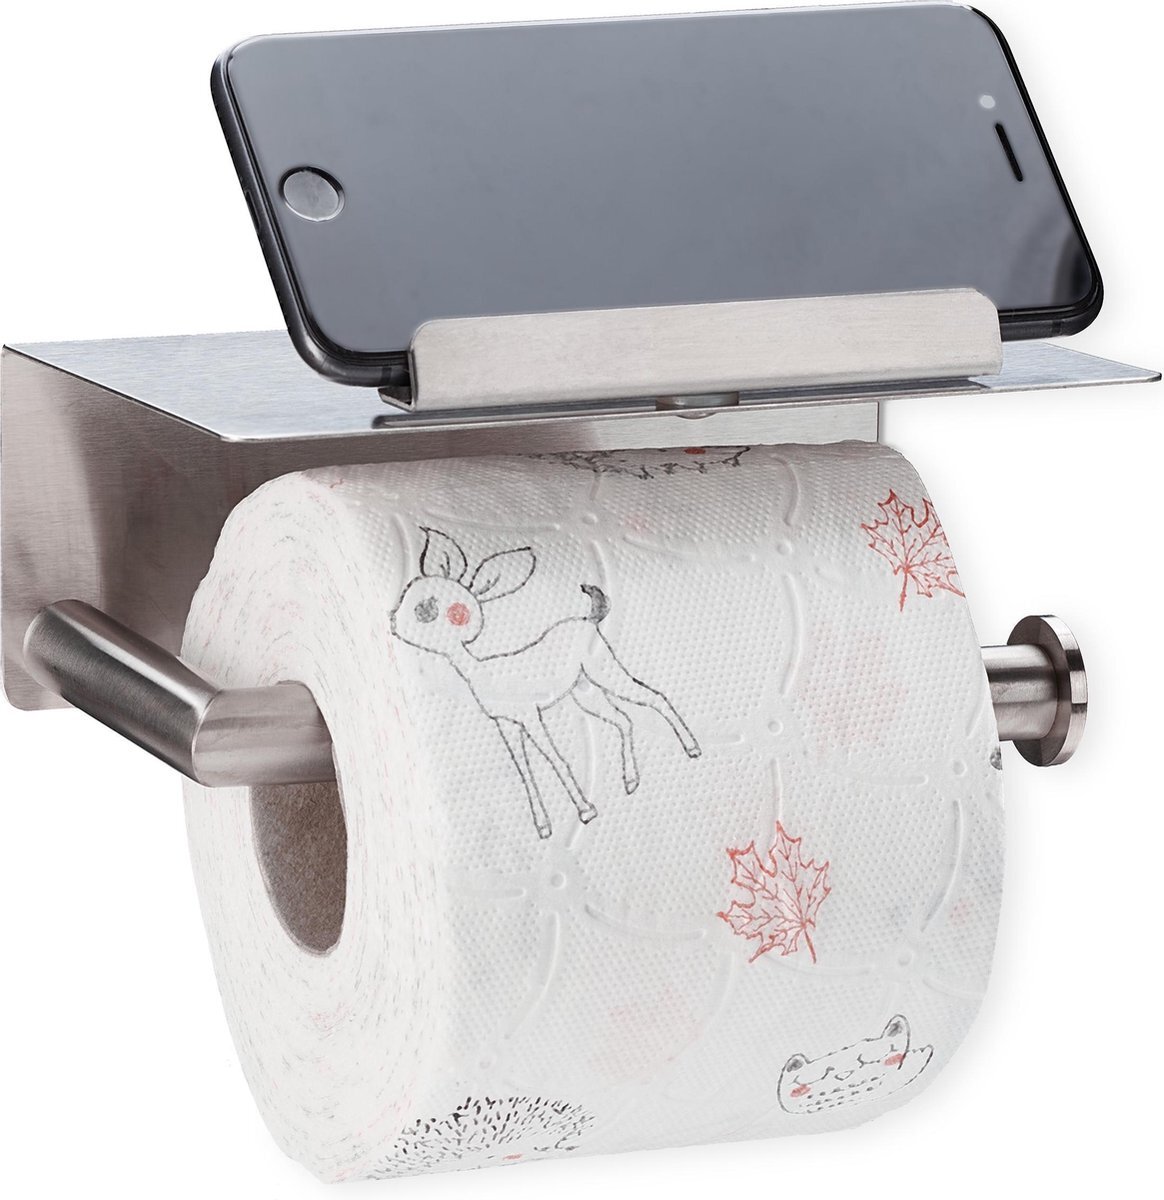 Relaxdays toiletrolhouder met plankje - geborsteld rvs zilver - wc rol houder zelfklevend